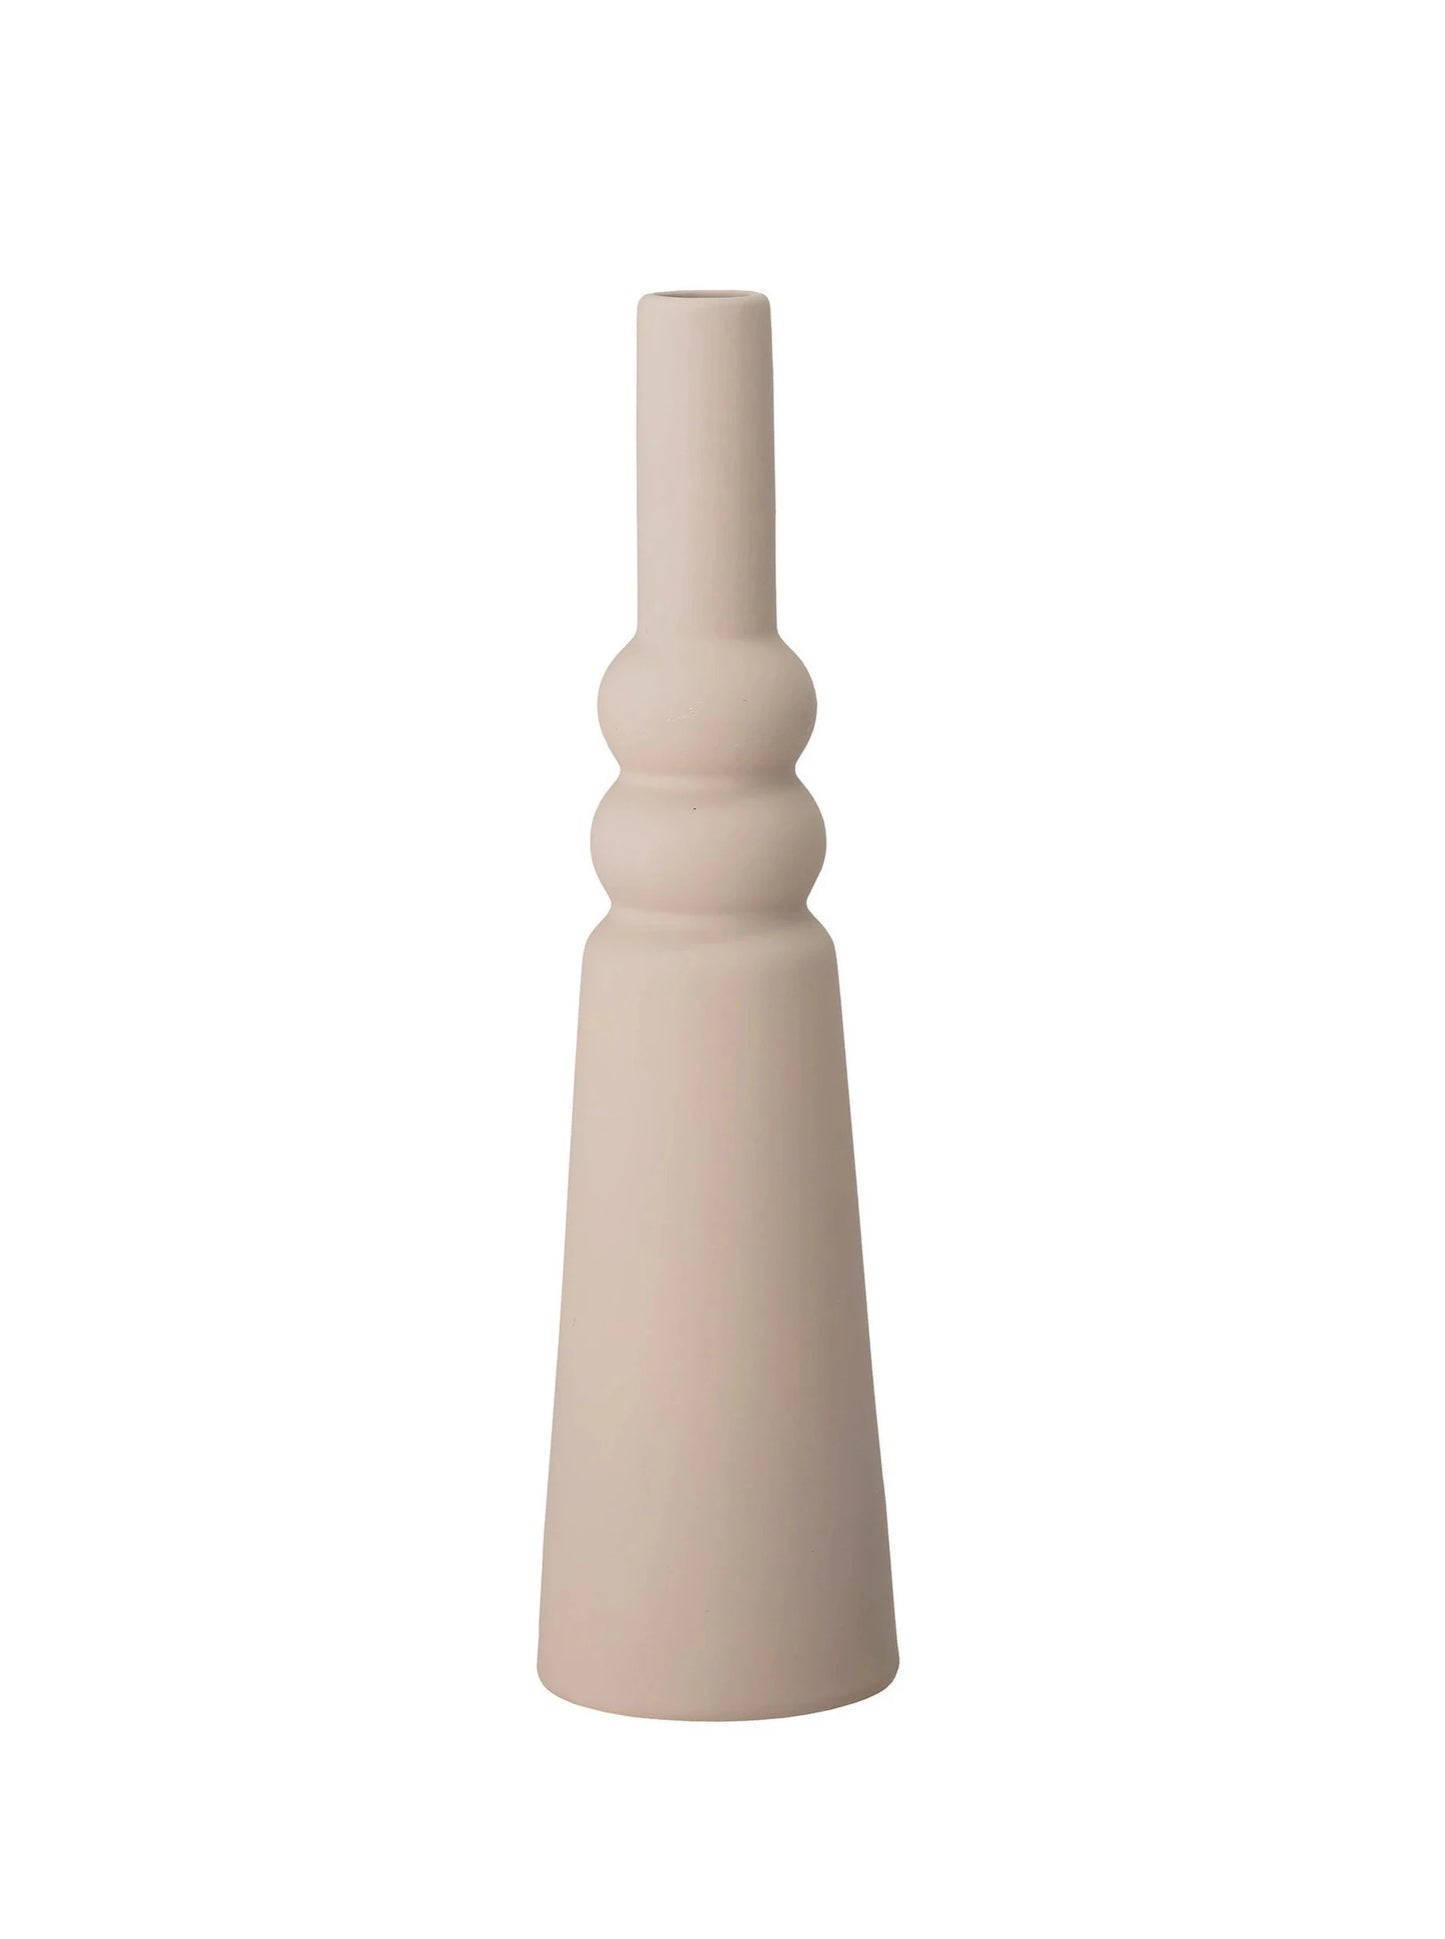 tall sculptural stoneware vase